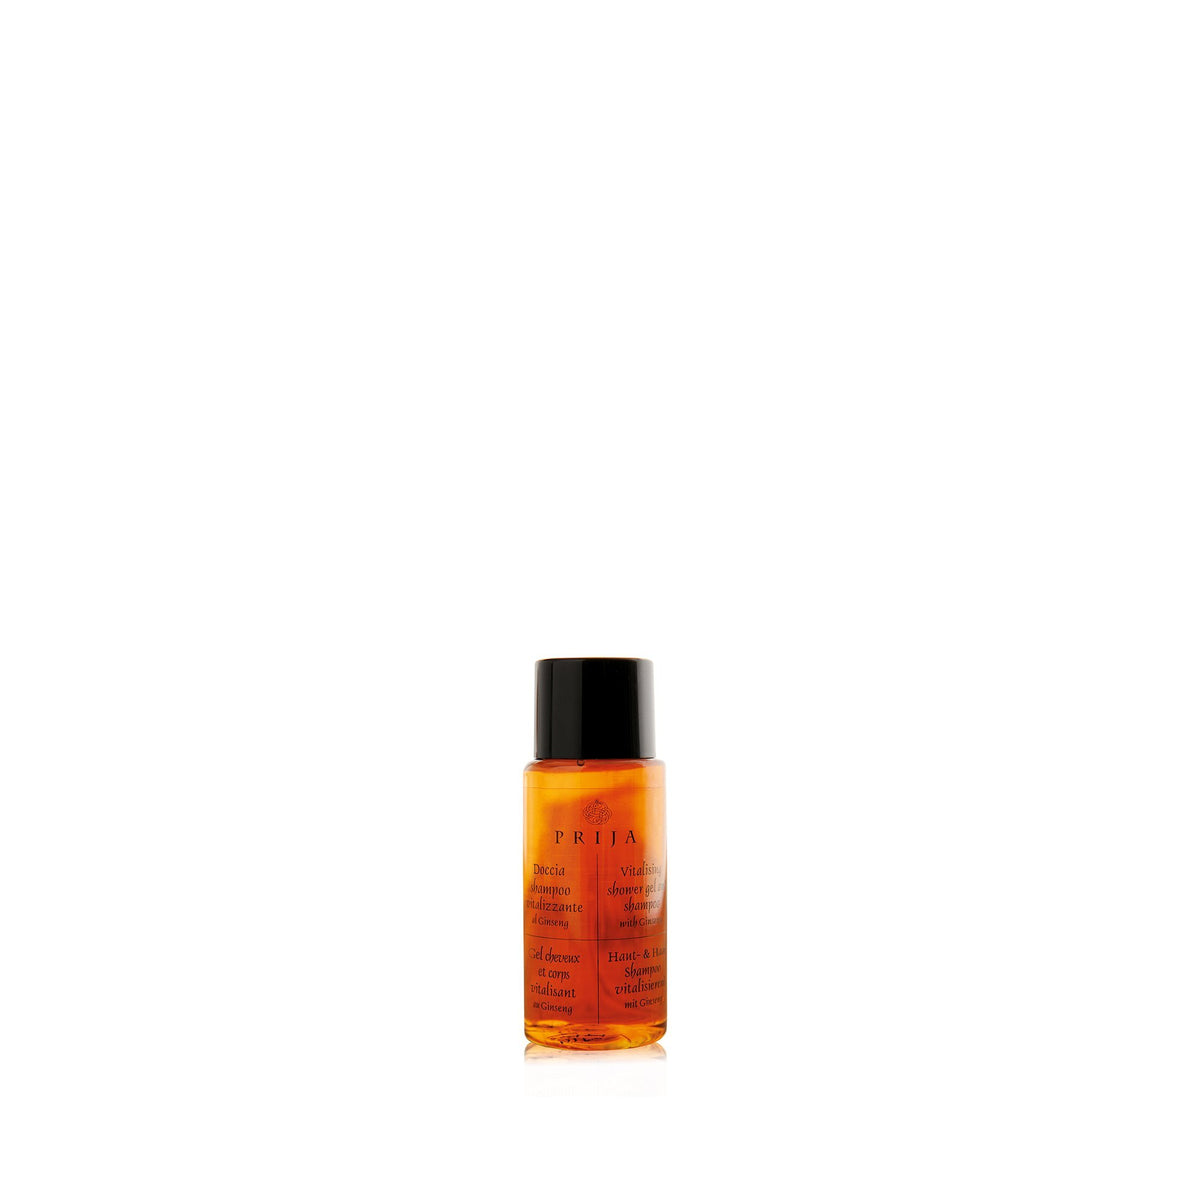 Prija vitalising Shower gel and shampoo (1.35 Fluid Ounce)